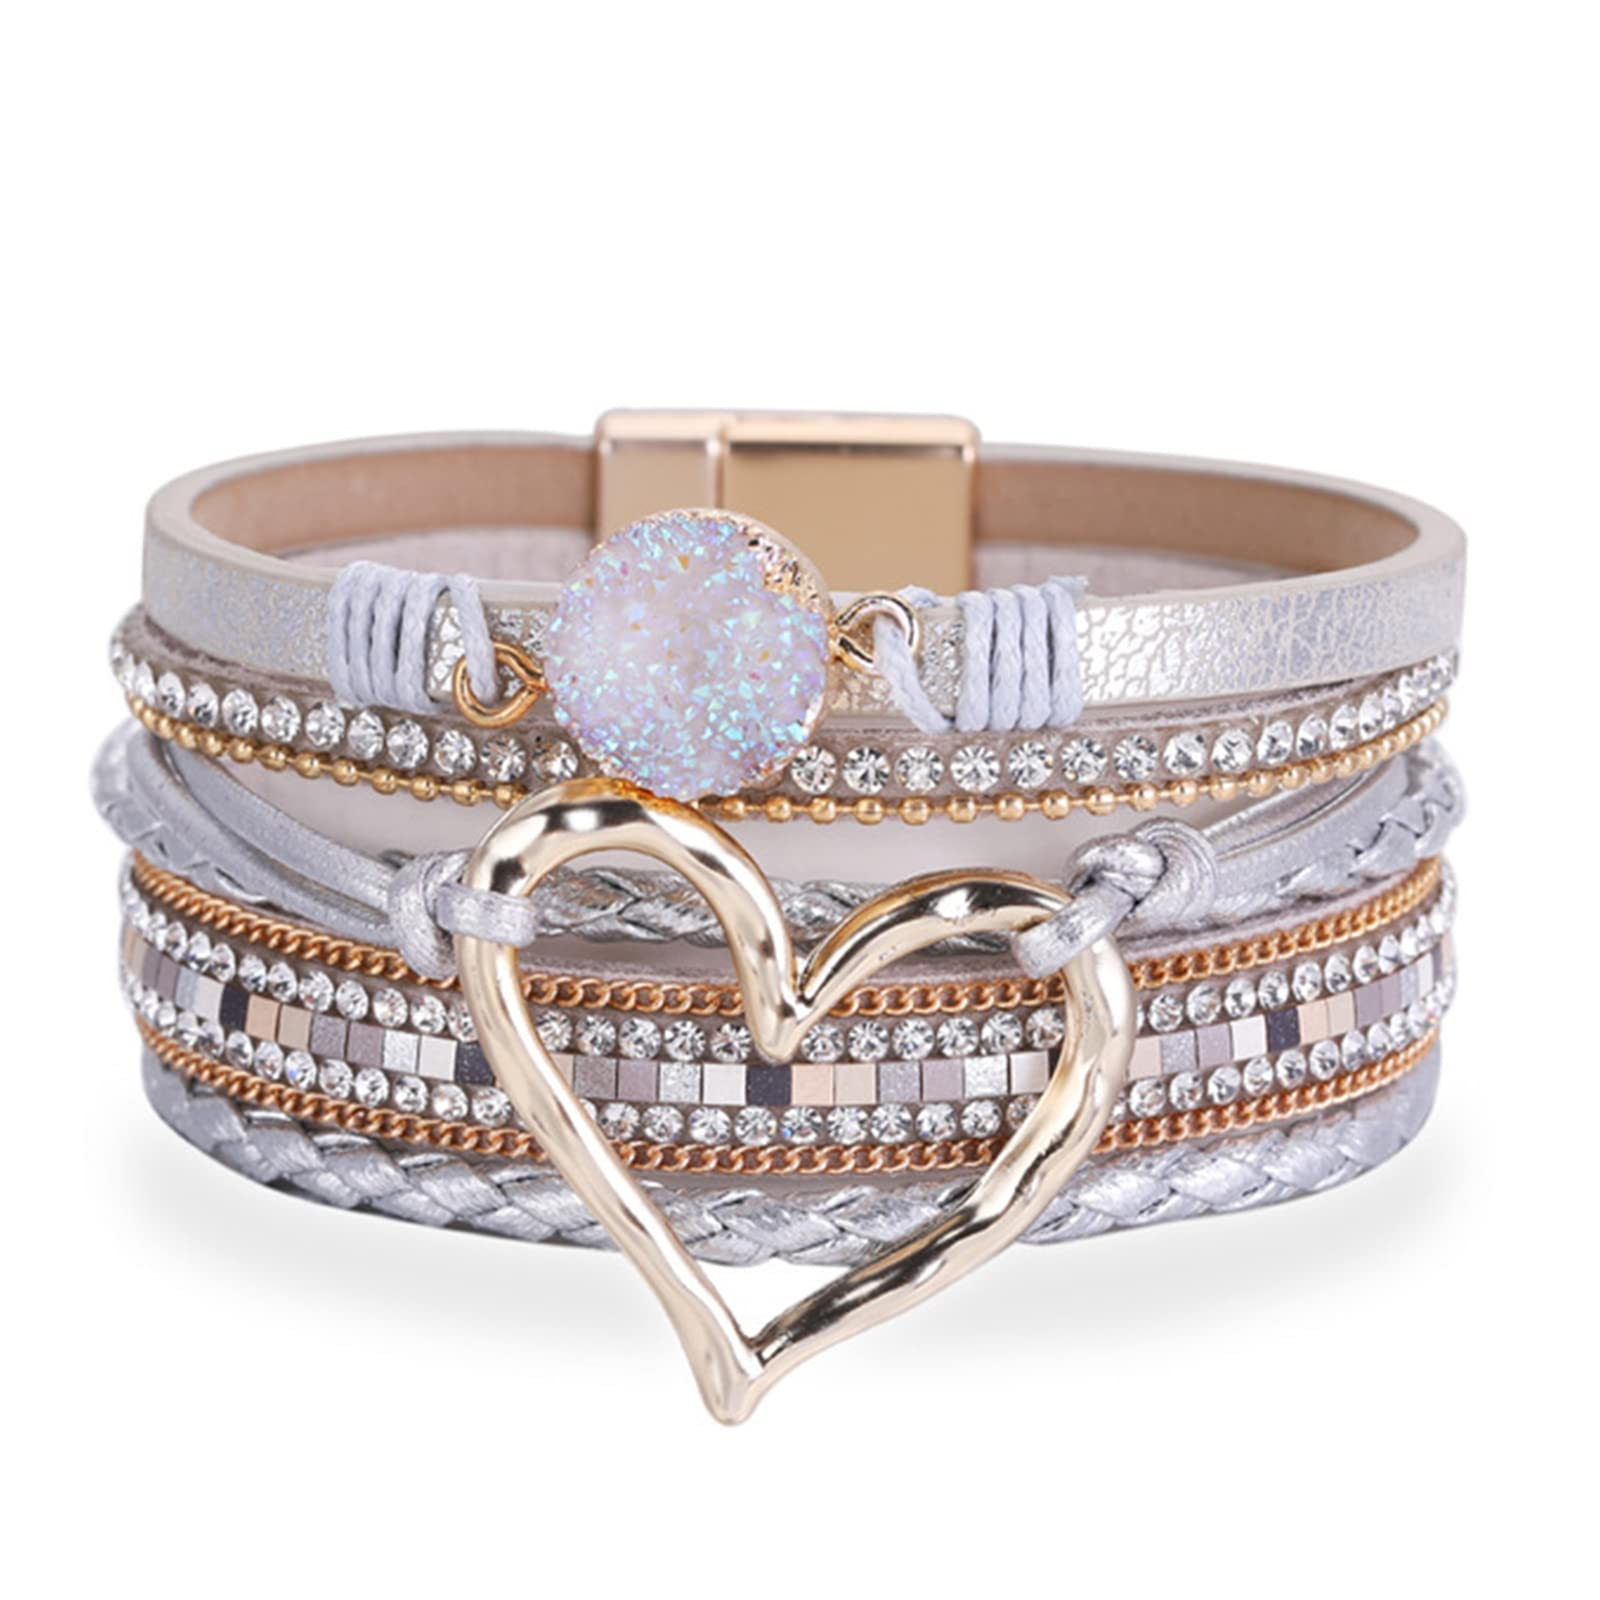 Multilayer Wrap Leather Bracelet Heart Modern Boho Bracelet with